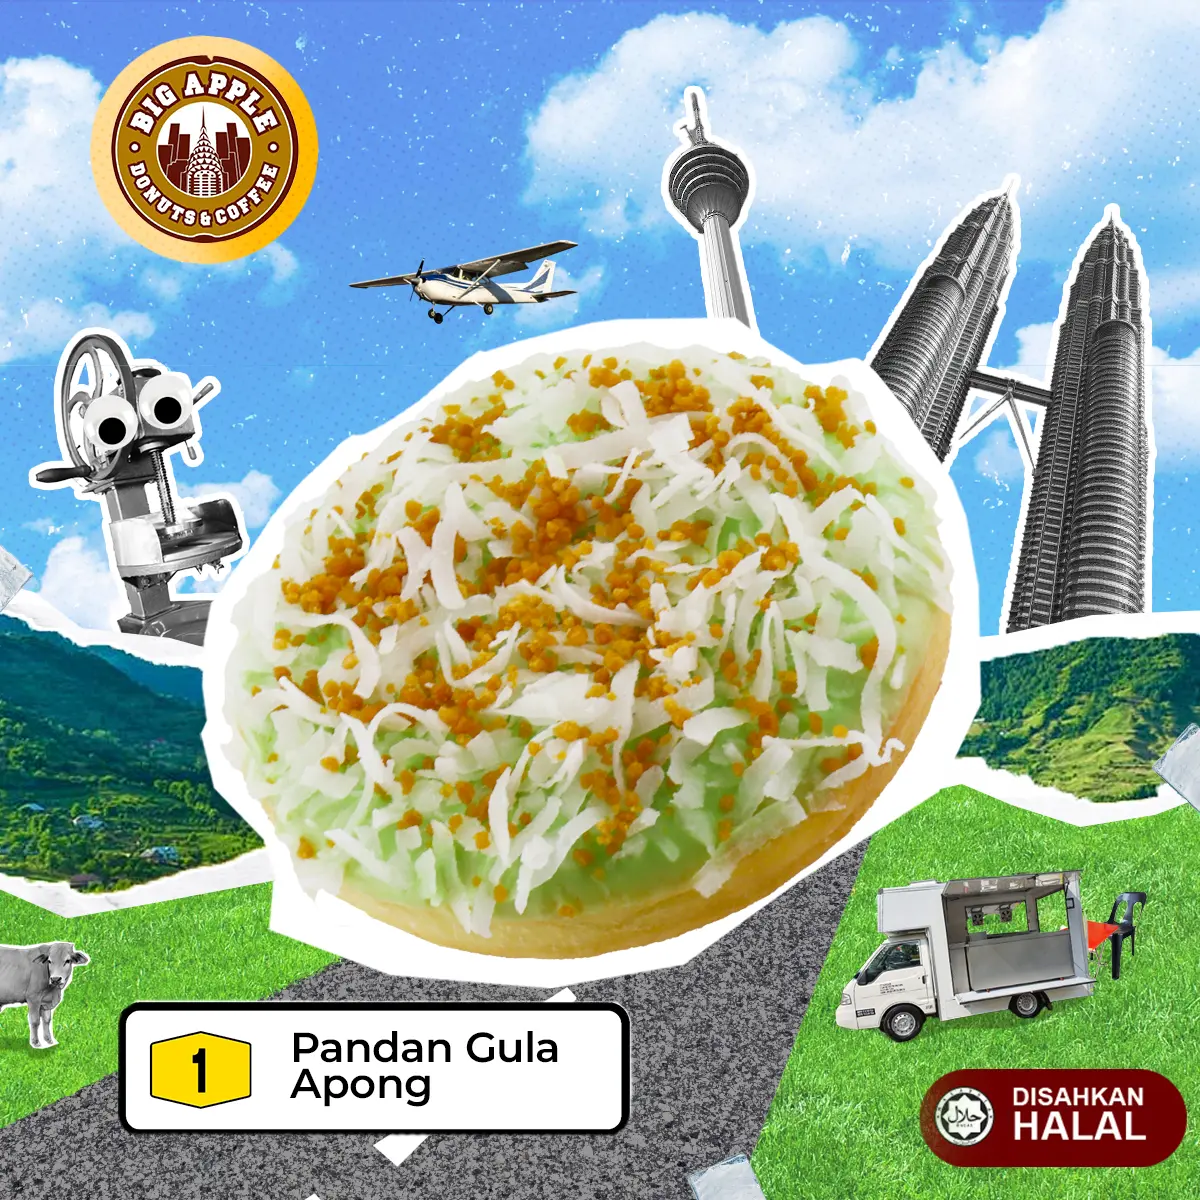 Pandan Gula Apong: The New Flavor Sensation from Big Apple Donuts